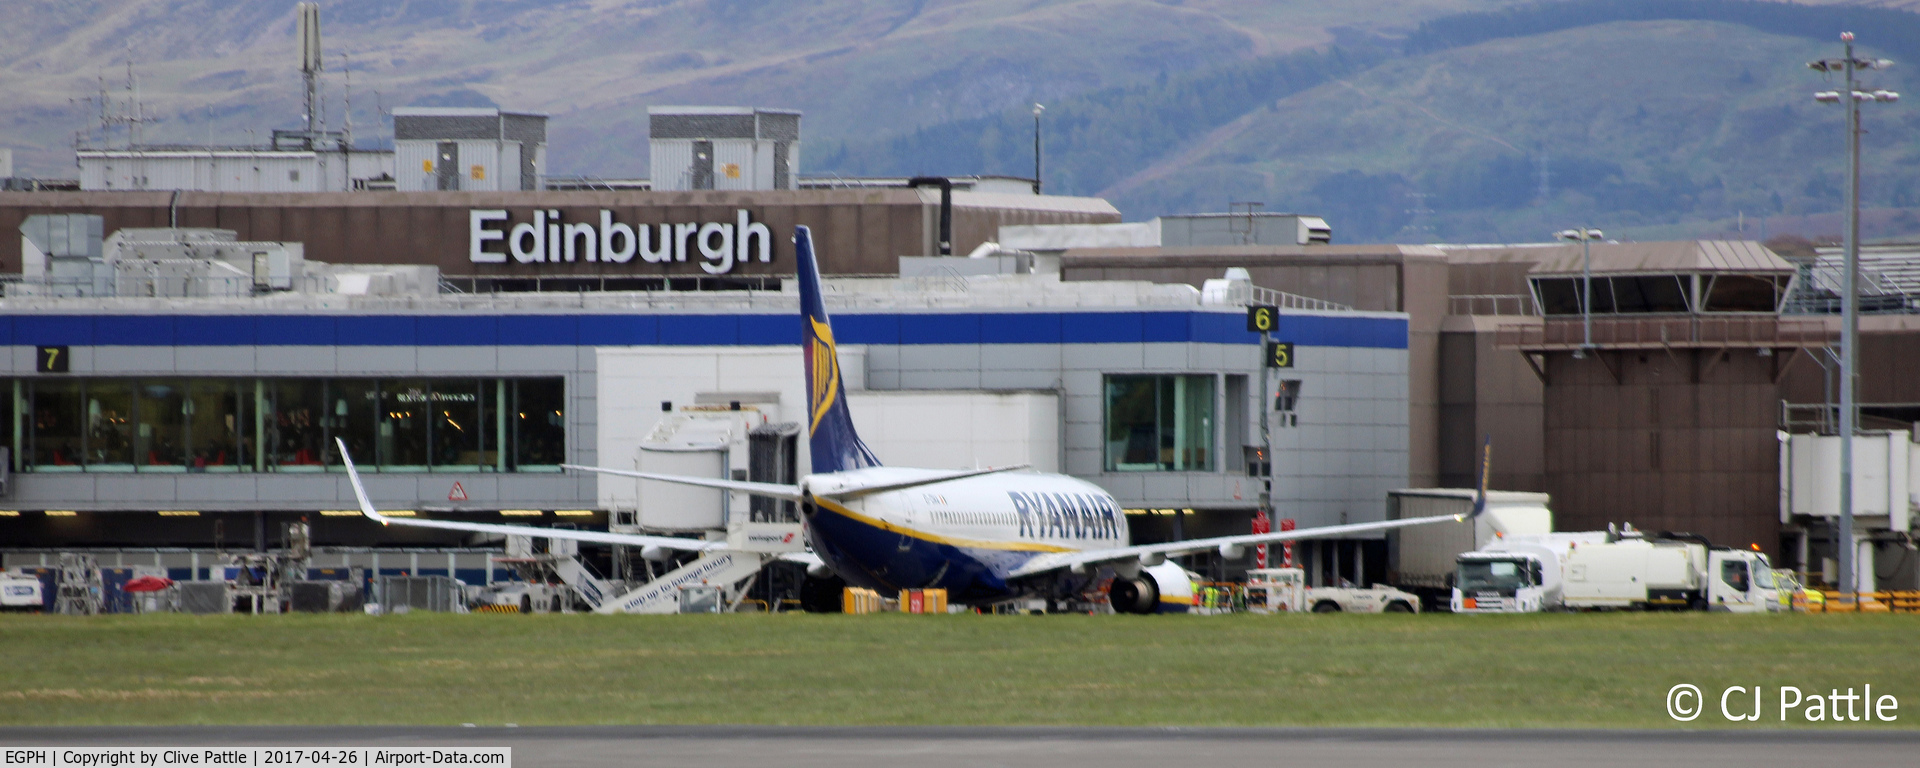 Edinburgh Airport, Edinburgh, Scotland United Kingdom (EGPH) - EDI terminal